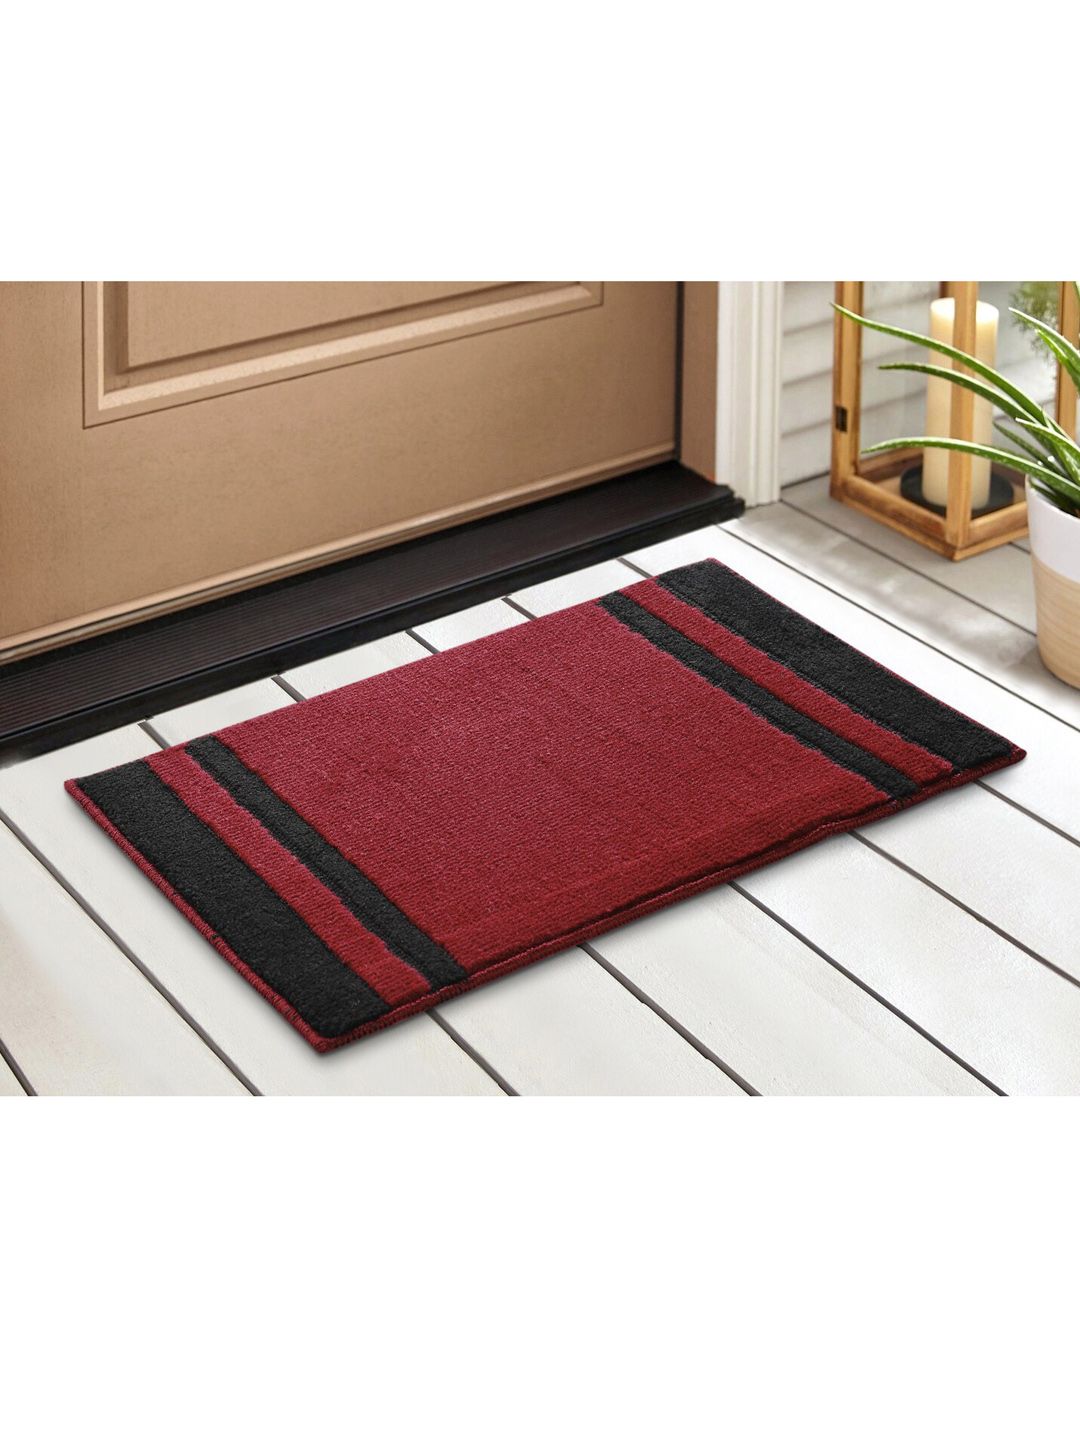 Saral Home Maroon & Black Printed Cotton Anti-Skid Doormats Price in India